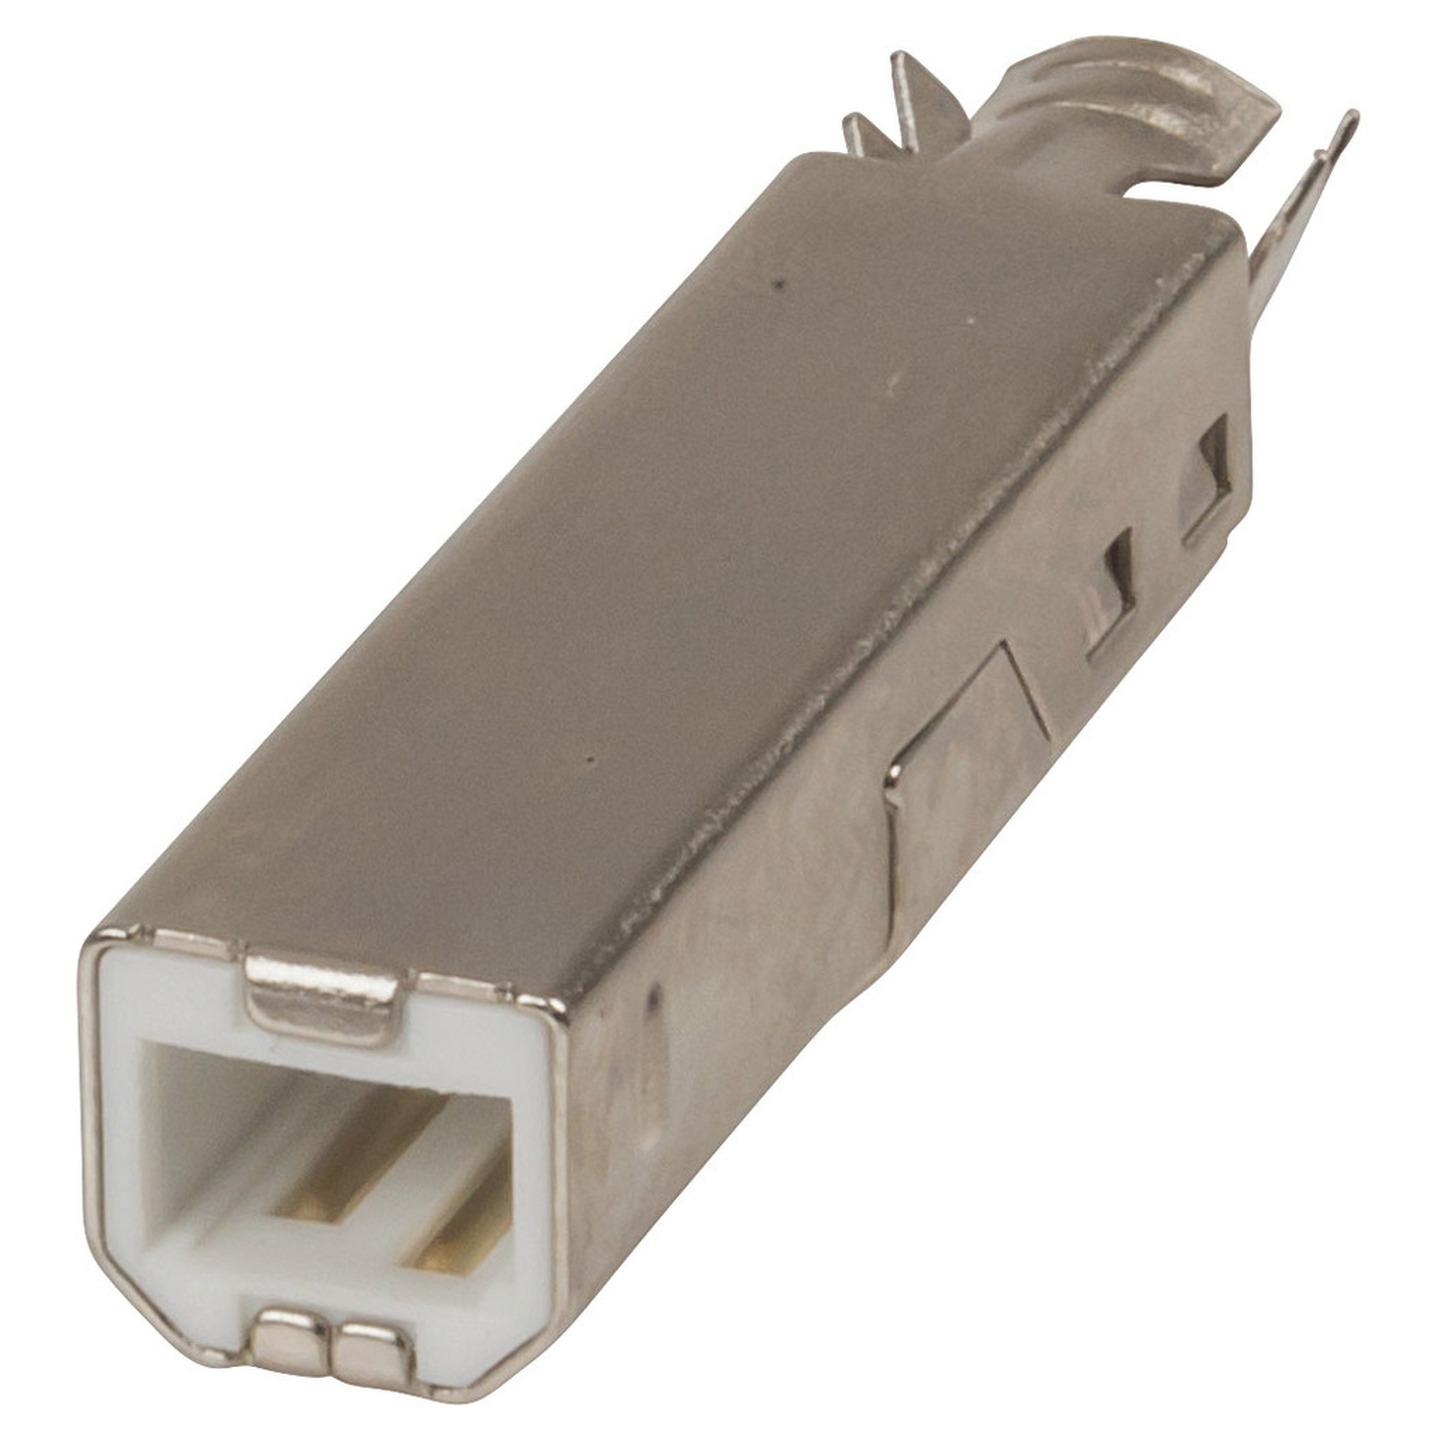 USB Plug - Type B - Solder type